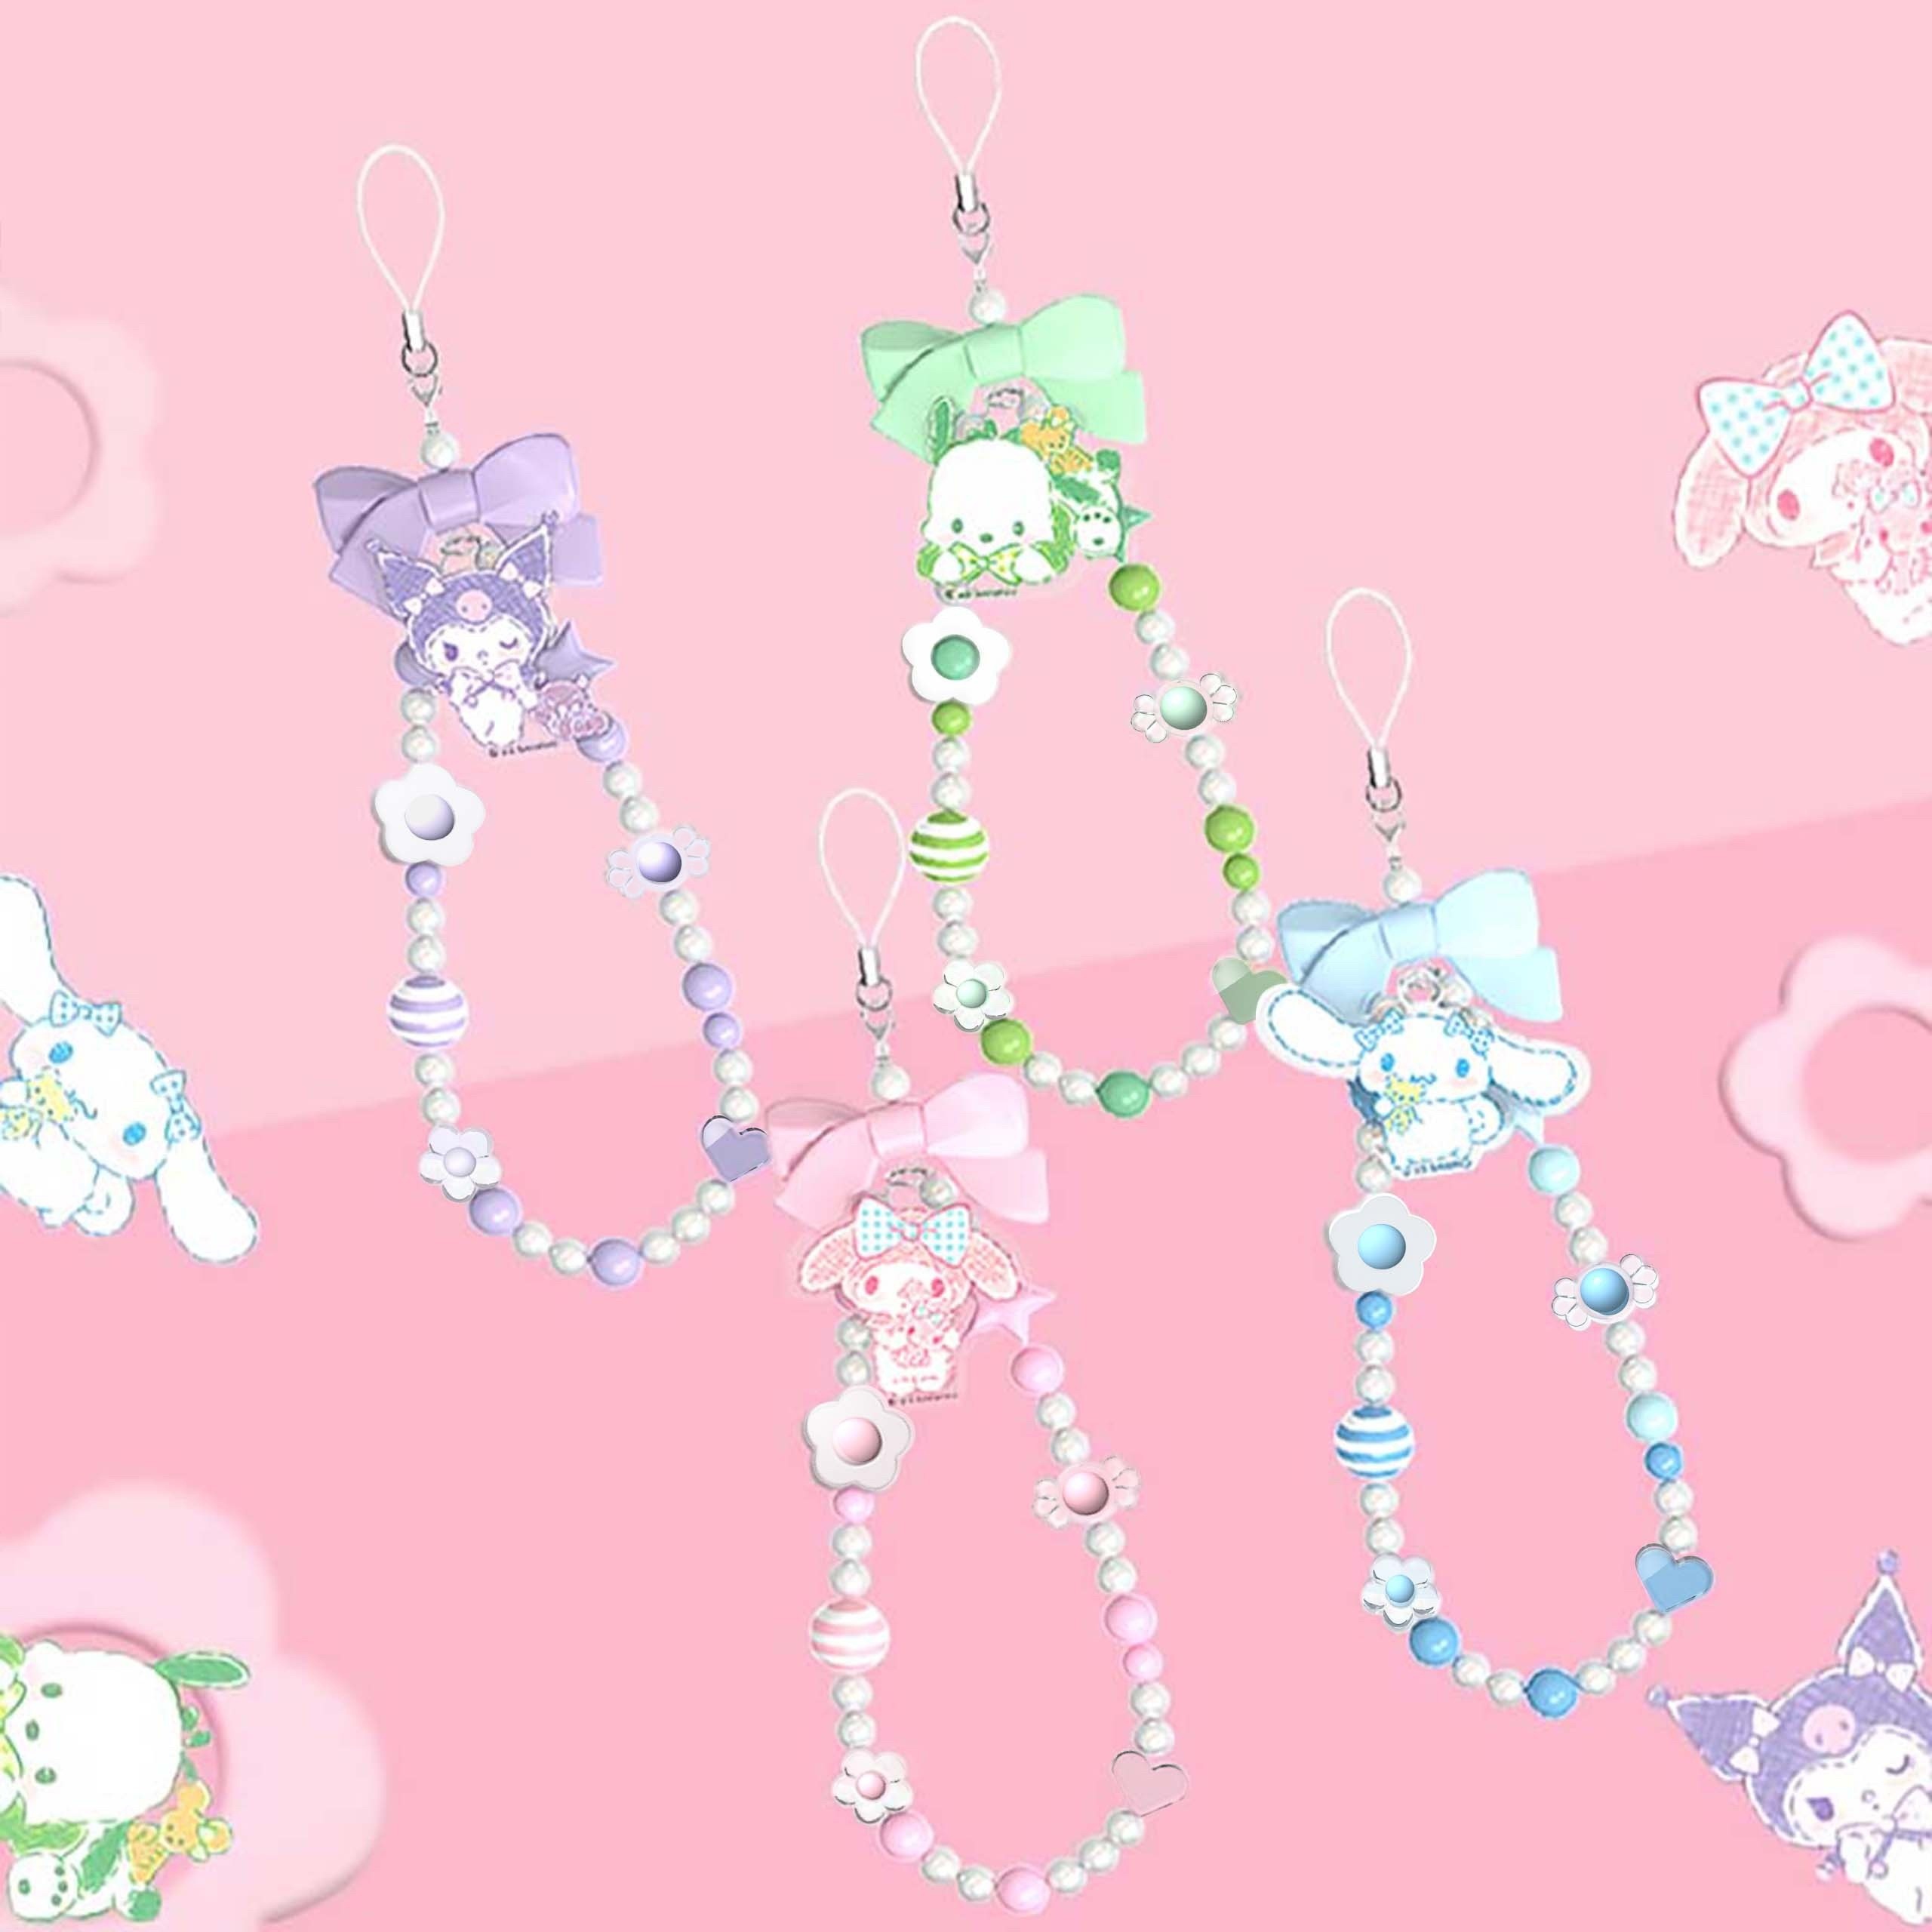 New Kawaii Sanrio Hello Kitty Mymelody bell bracelet Schoolgirl